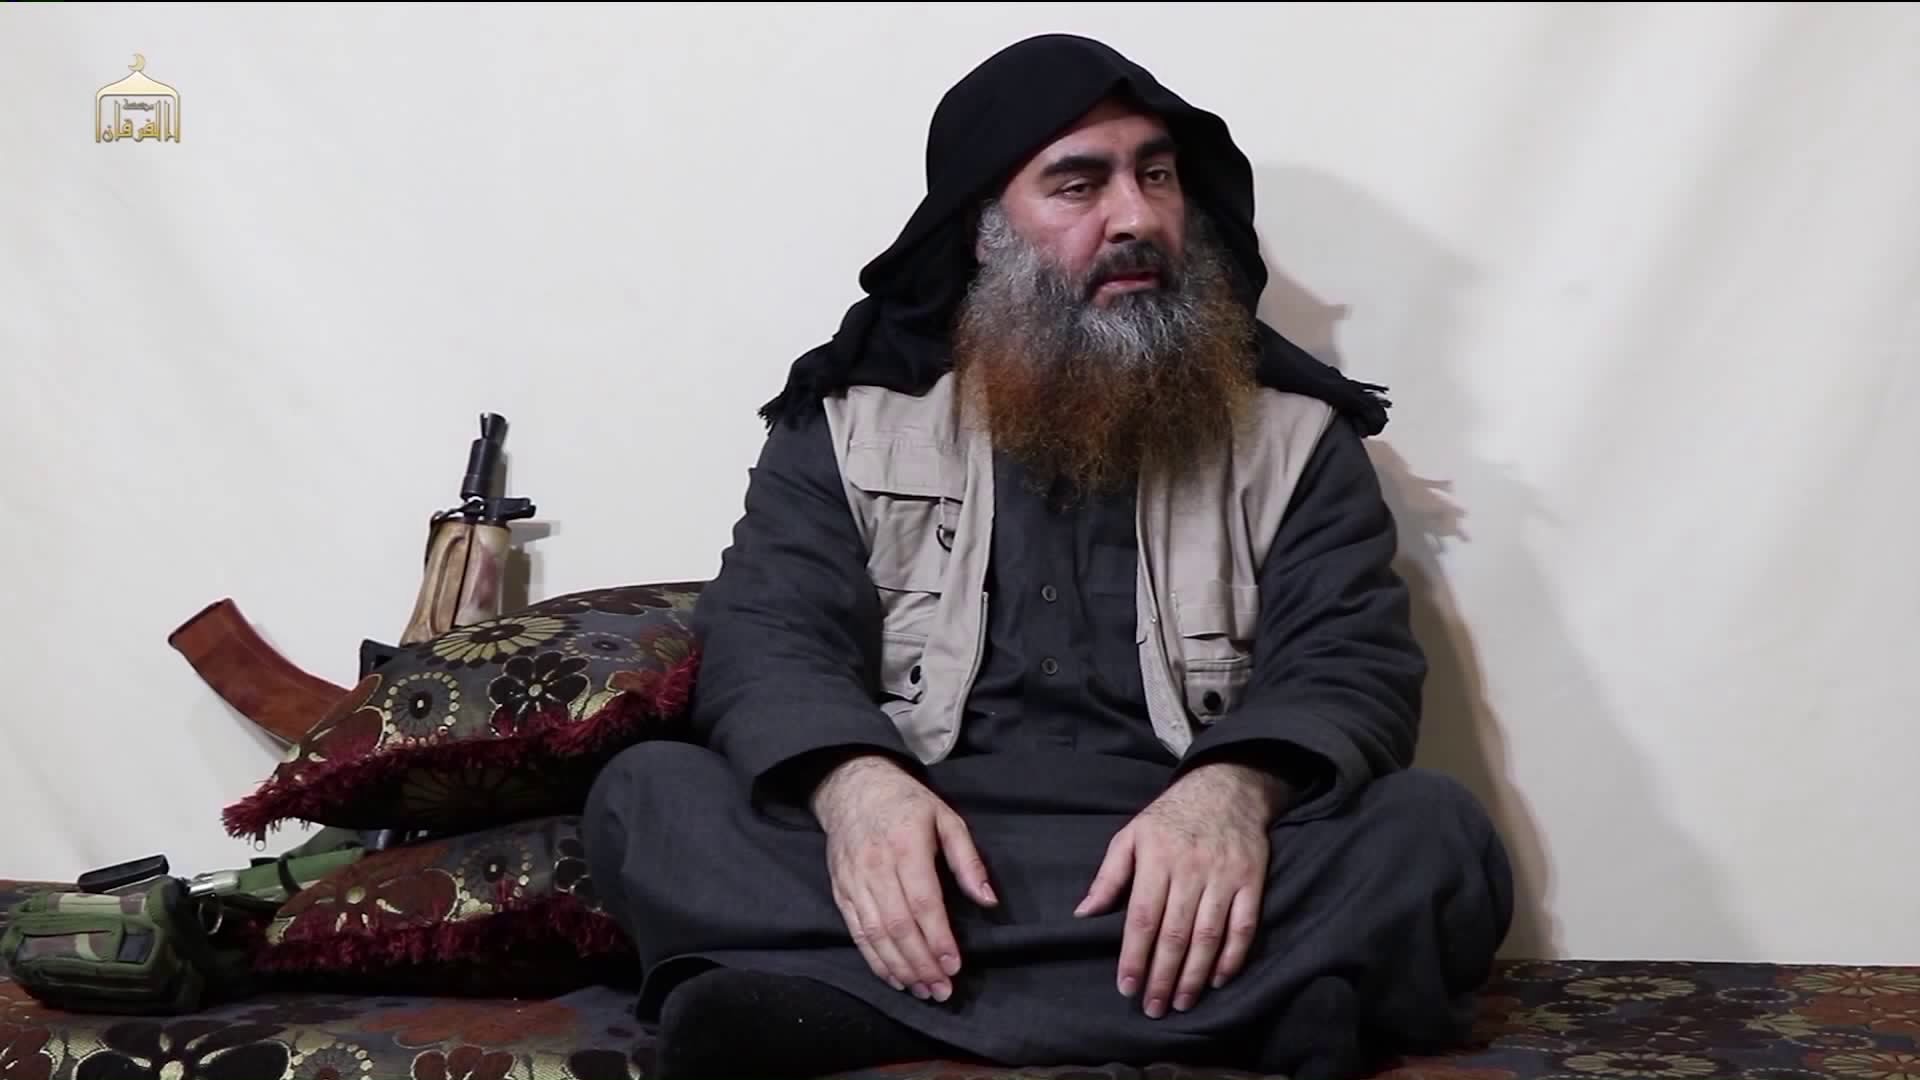 ISIS Leader killed